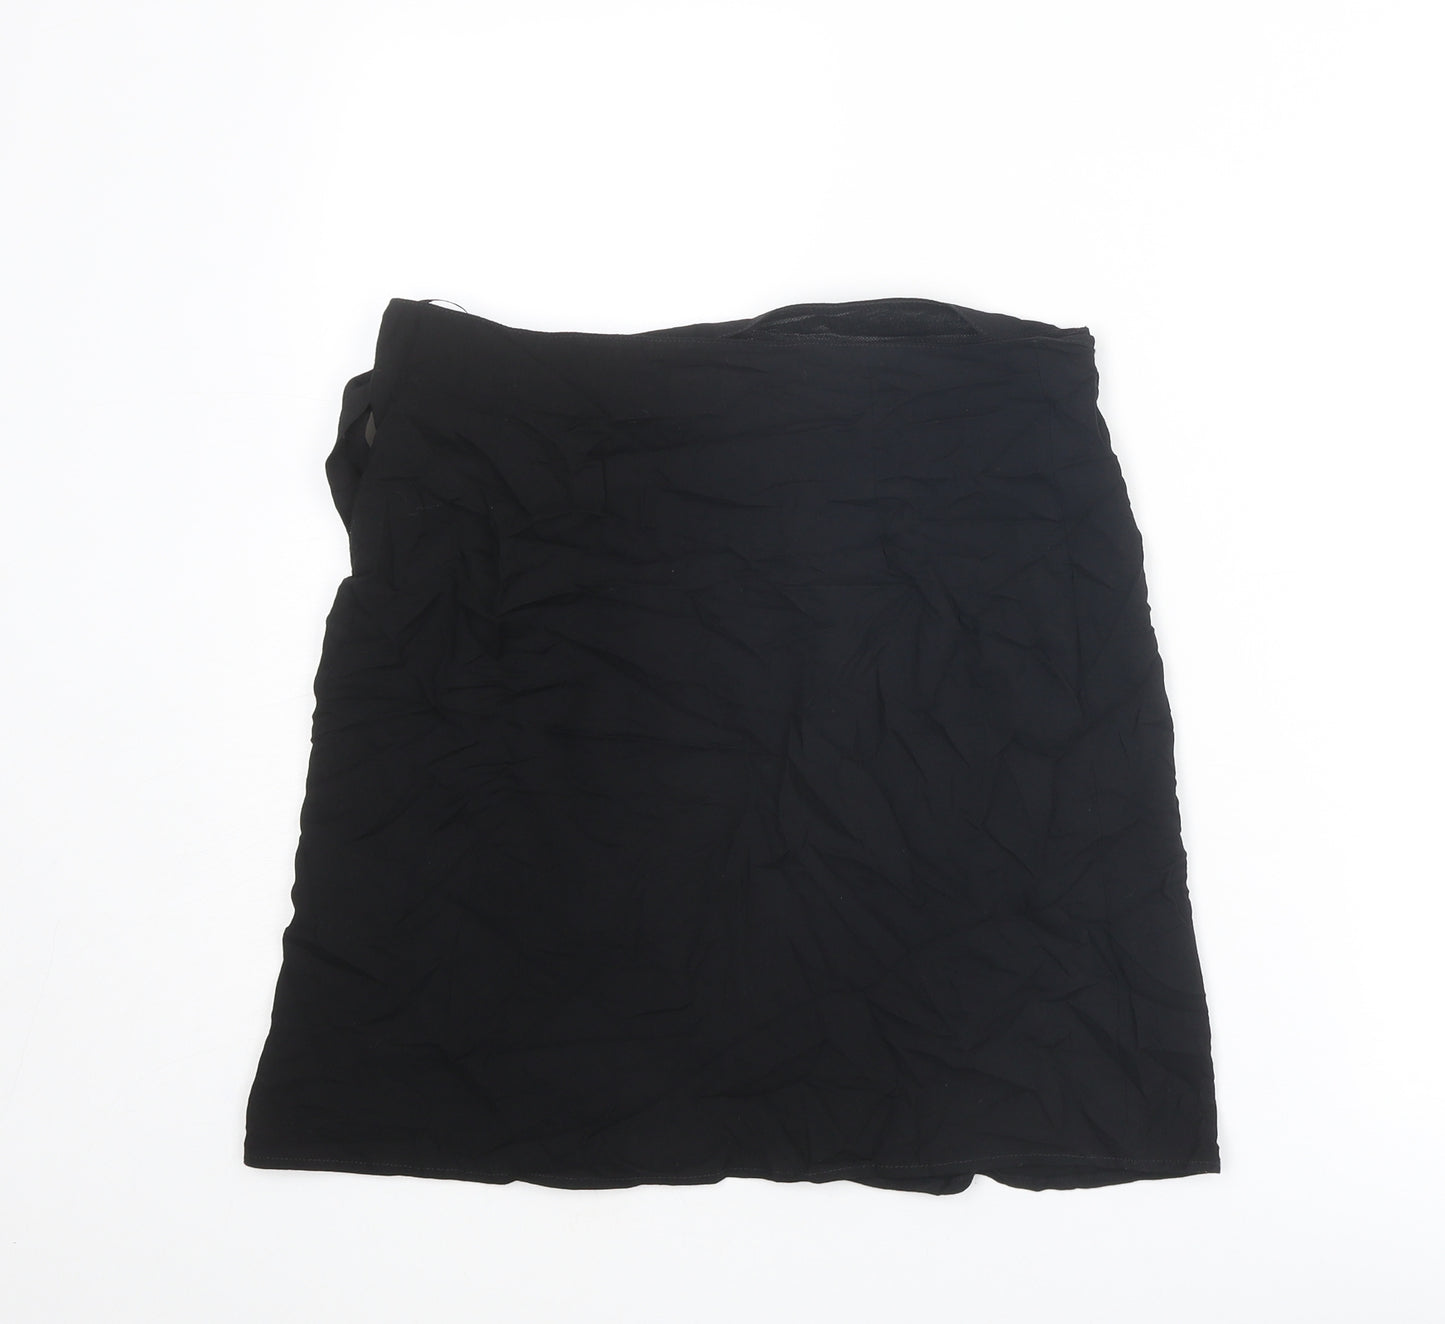 New Look Womens Black Viscose Wrap Skirt Size 10 Button